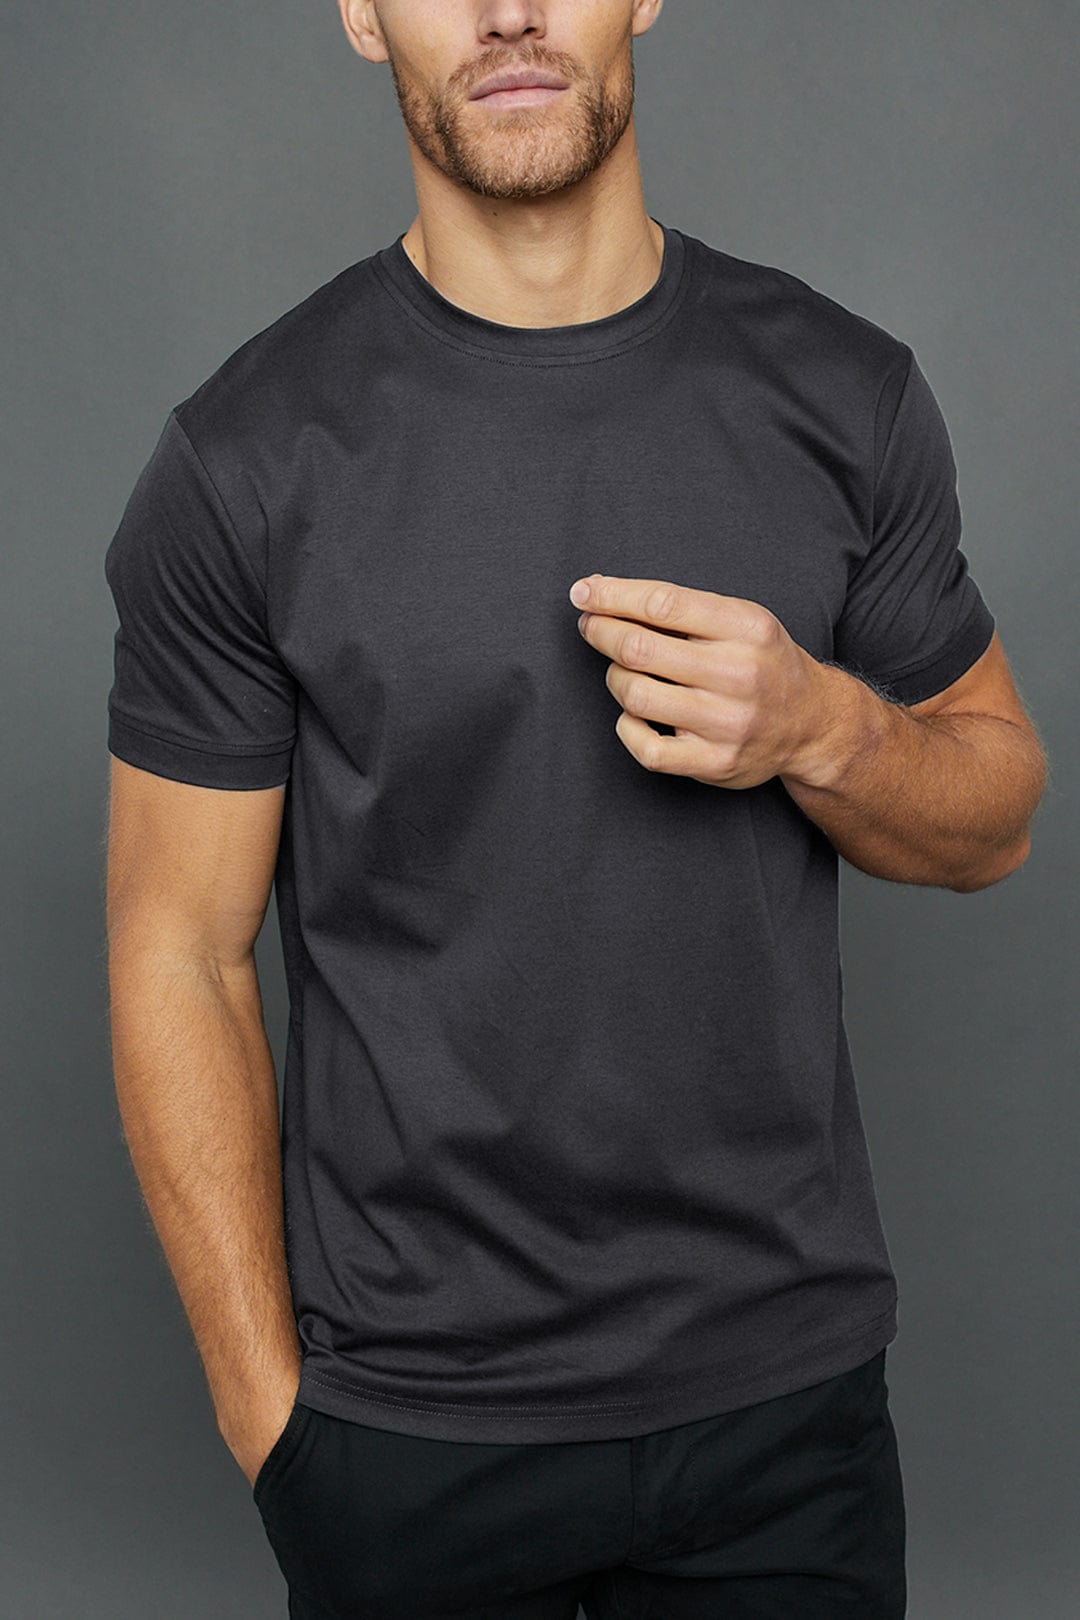 Luxe Mercerised T-Shirt - Charcoal